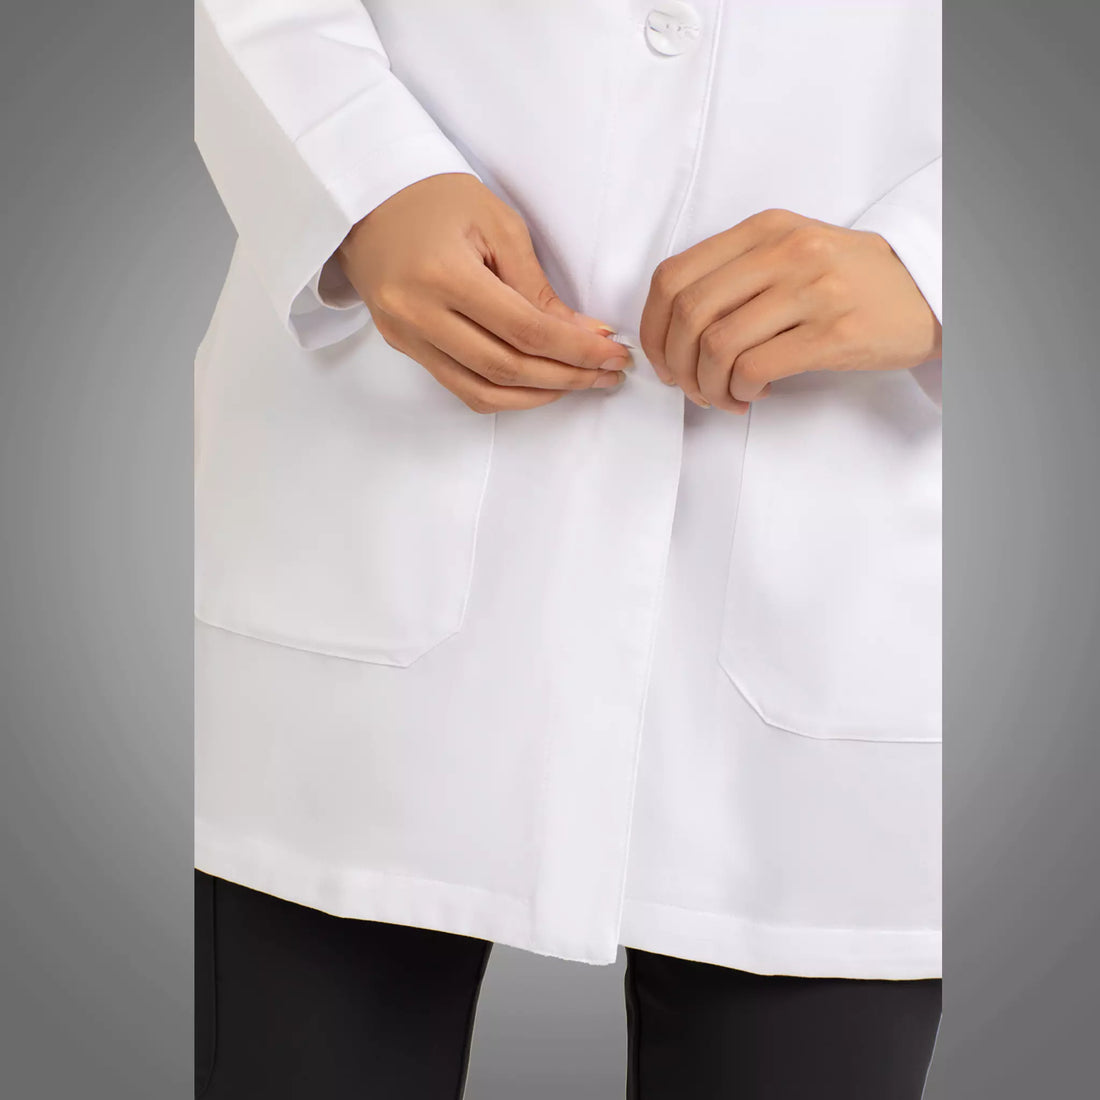 Grey's Anatomy Signature 32" Women's Lab coat 2405 - scrubn